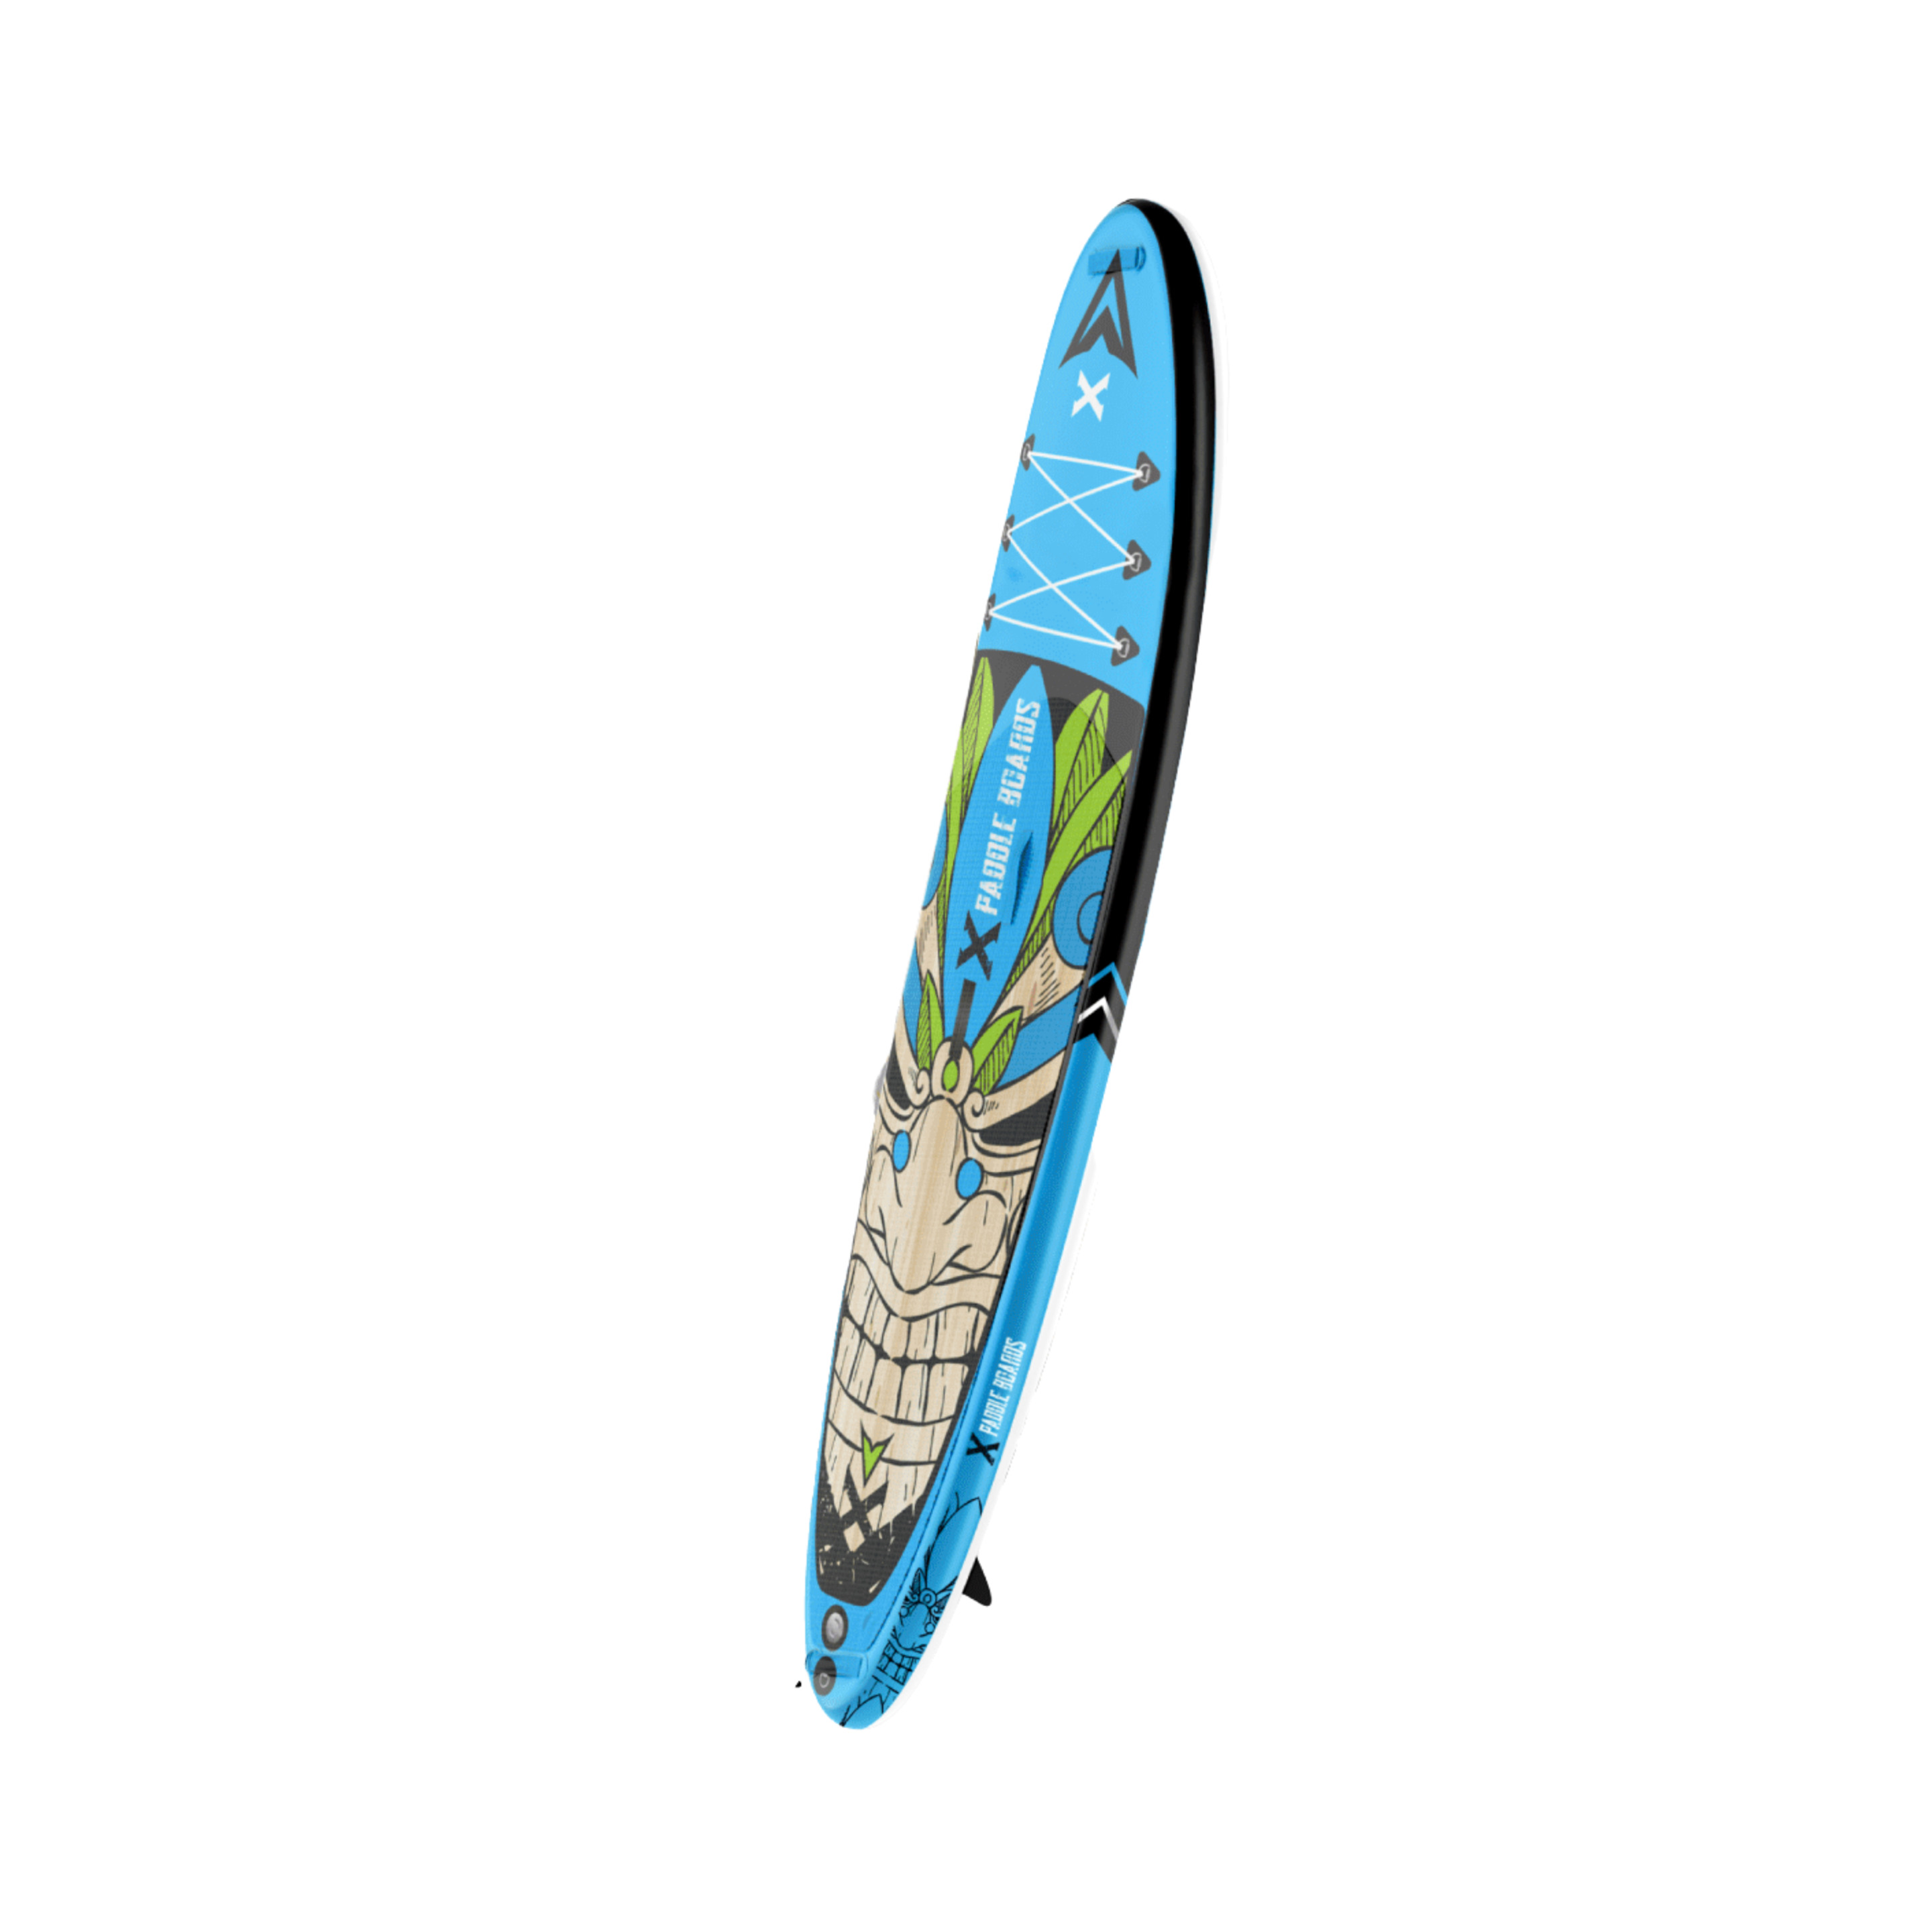 Tabla De Paddle Surf Hinchable Tiky-x 280 X 76 X 10cm - Amarillo/Verde  MKP